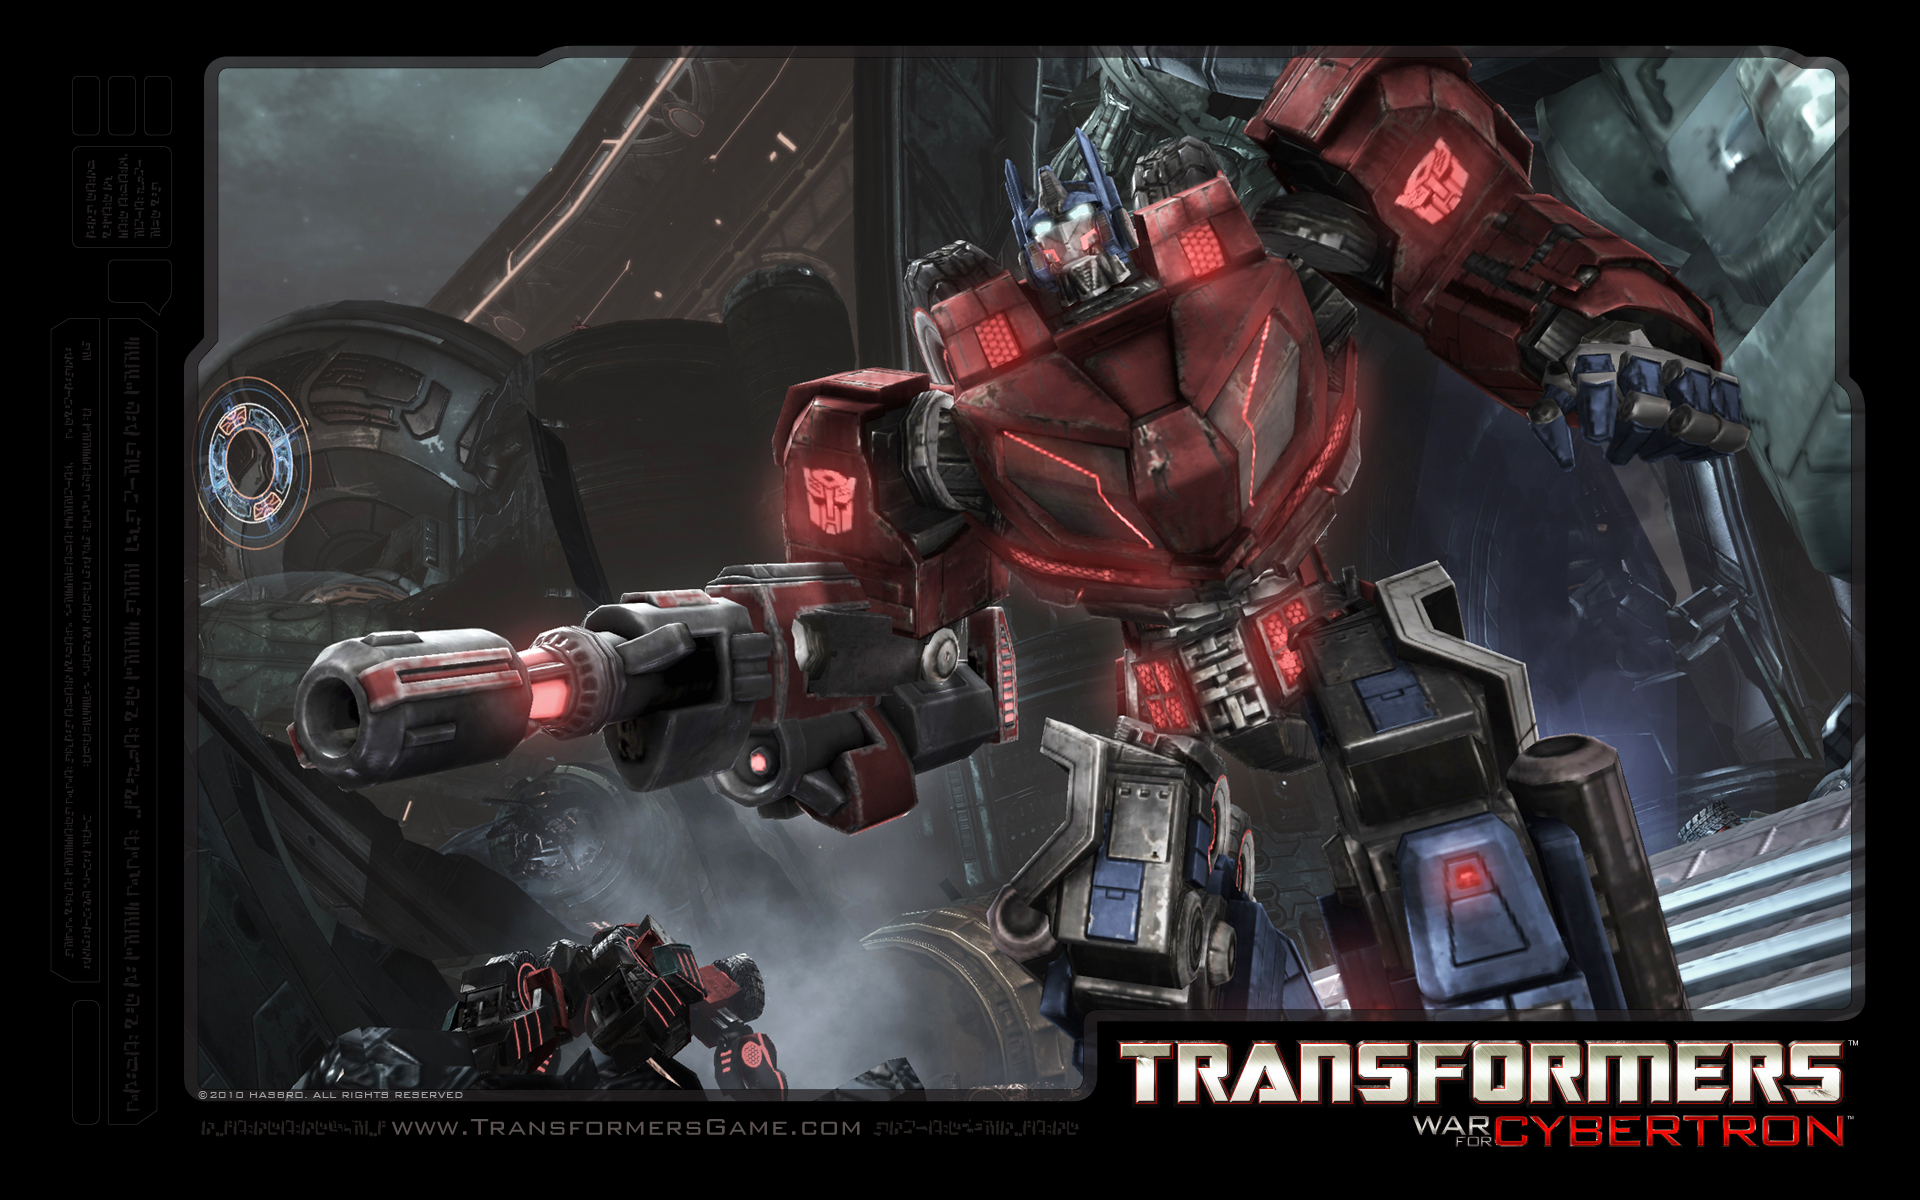 Transformers: War for Cybertron - Wallpaper Gallery